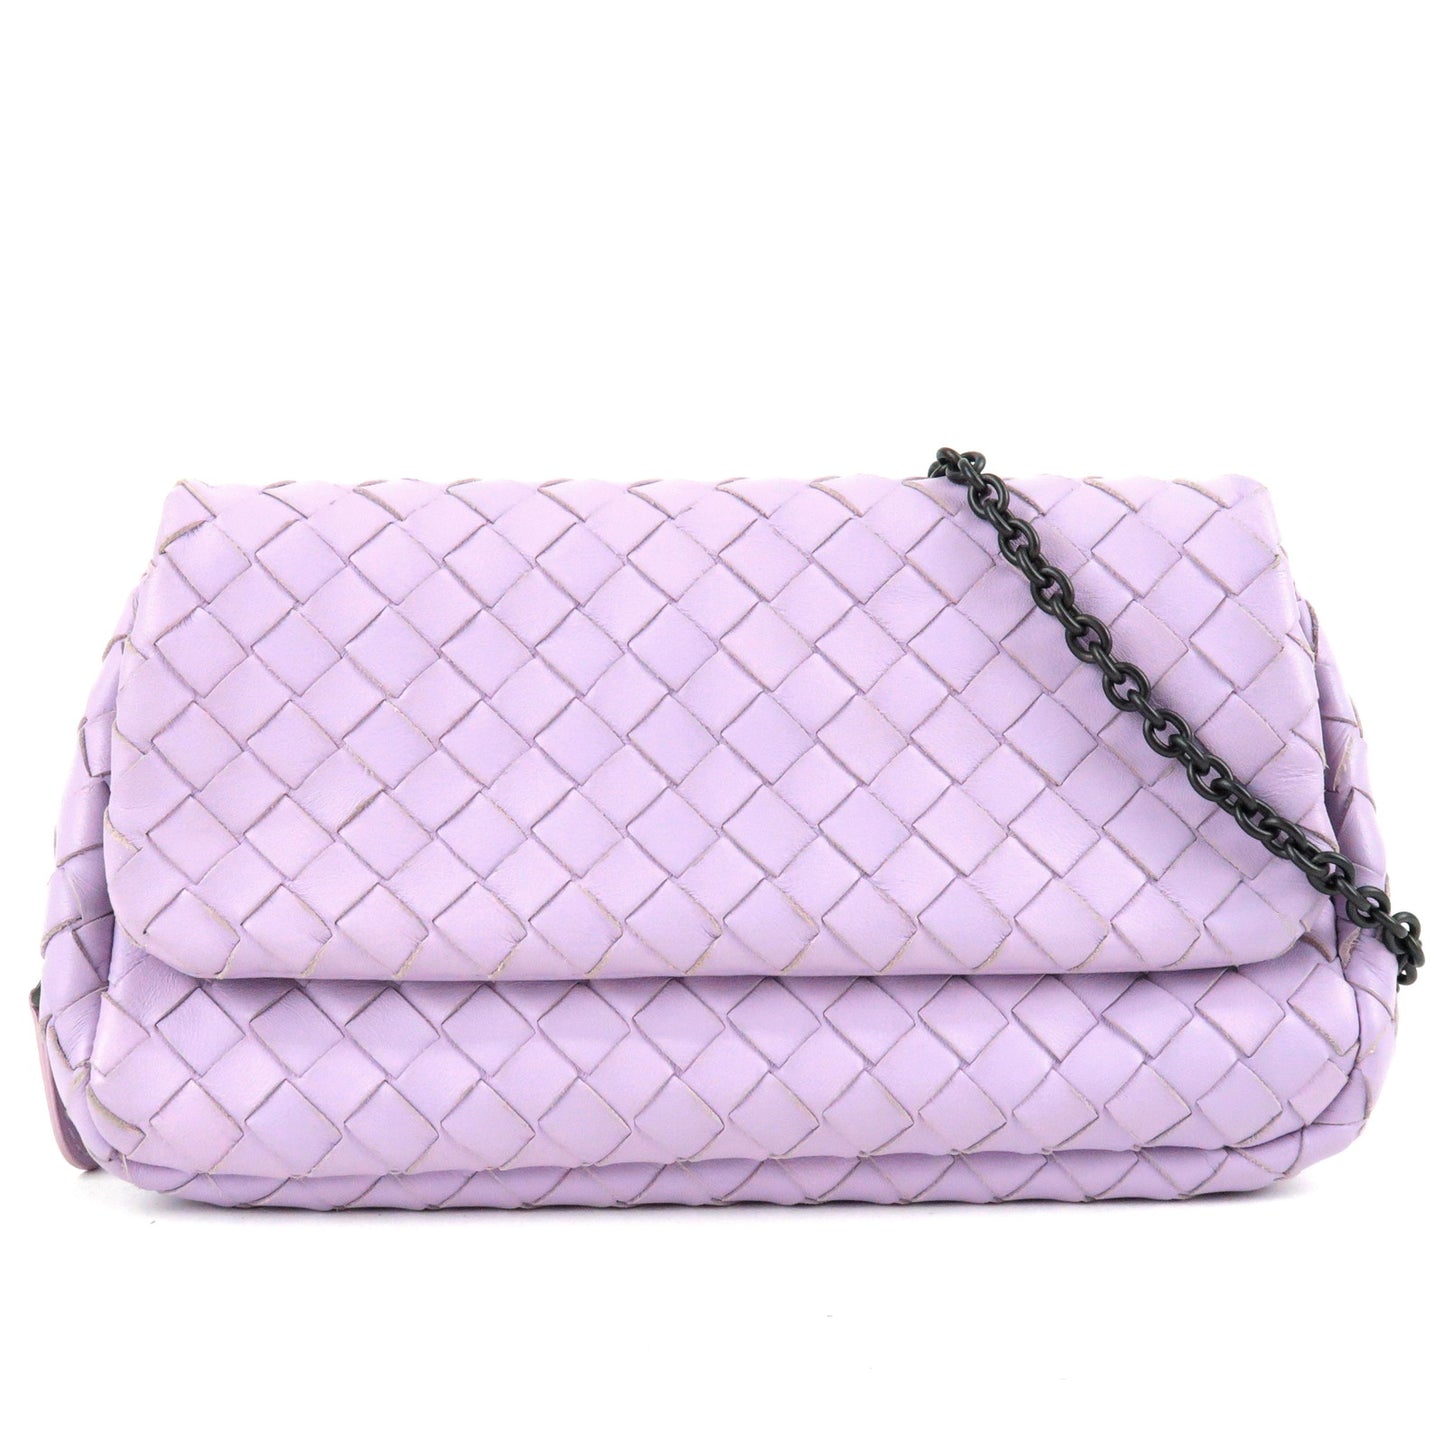 BOTTEGA-VENETA-Intrecciato-Leather-Shoulder-Bag-Lavender